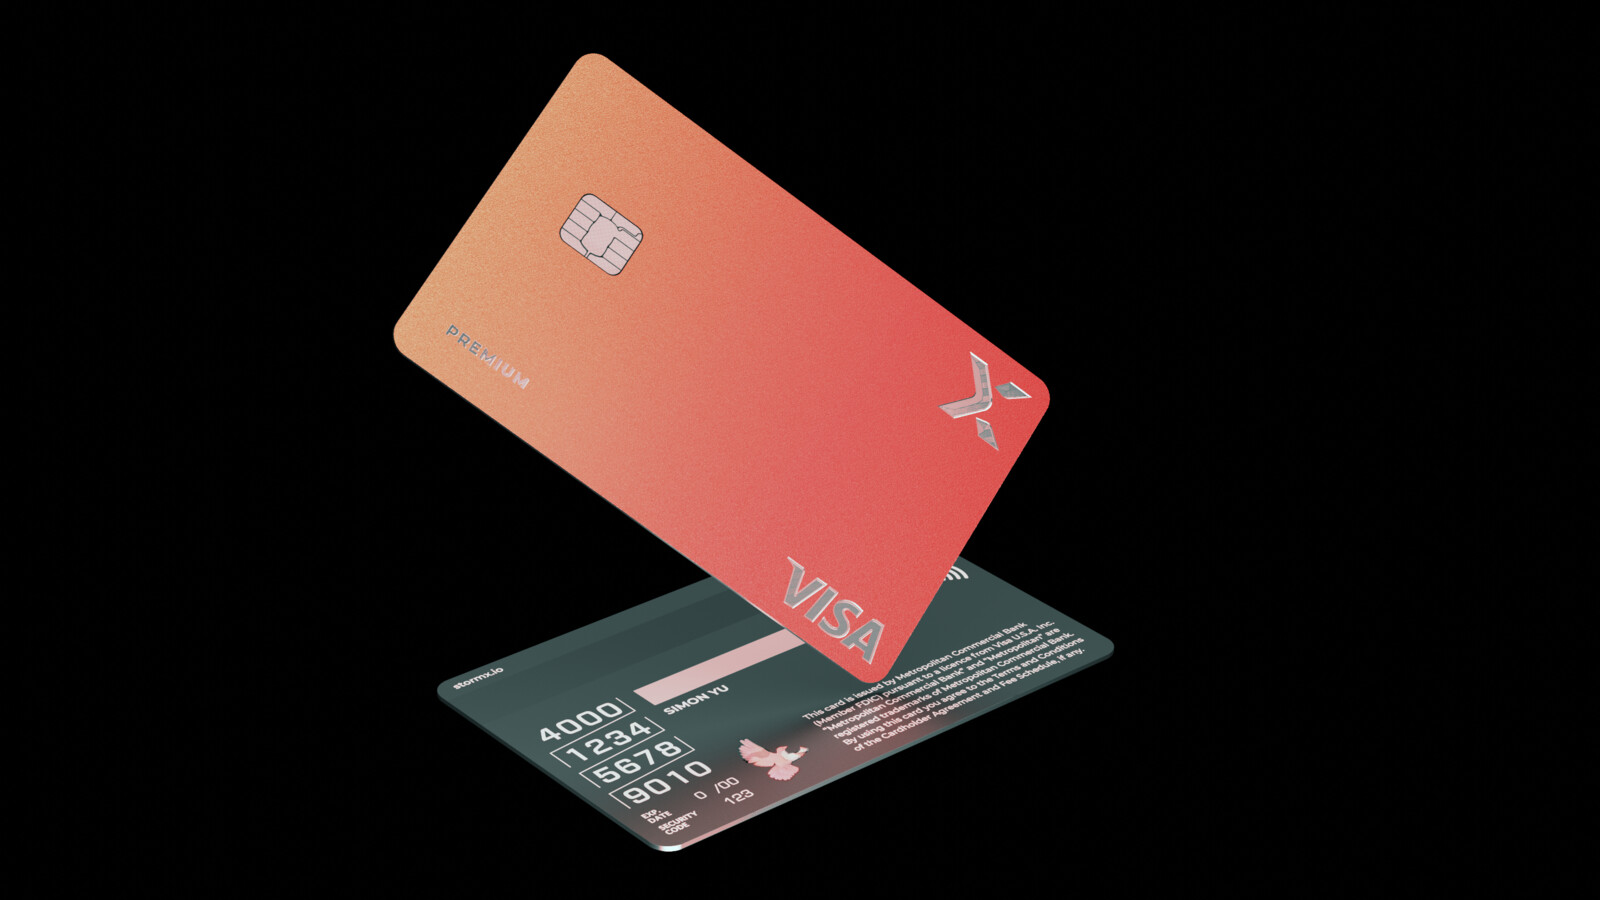 Credit/debit card